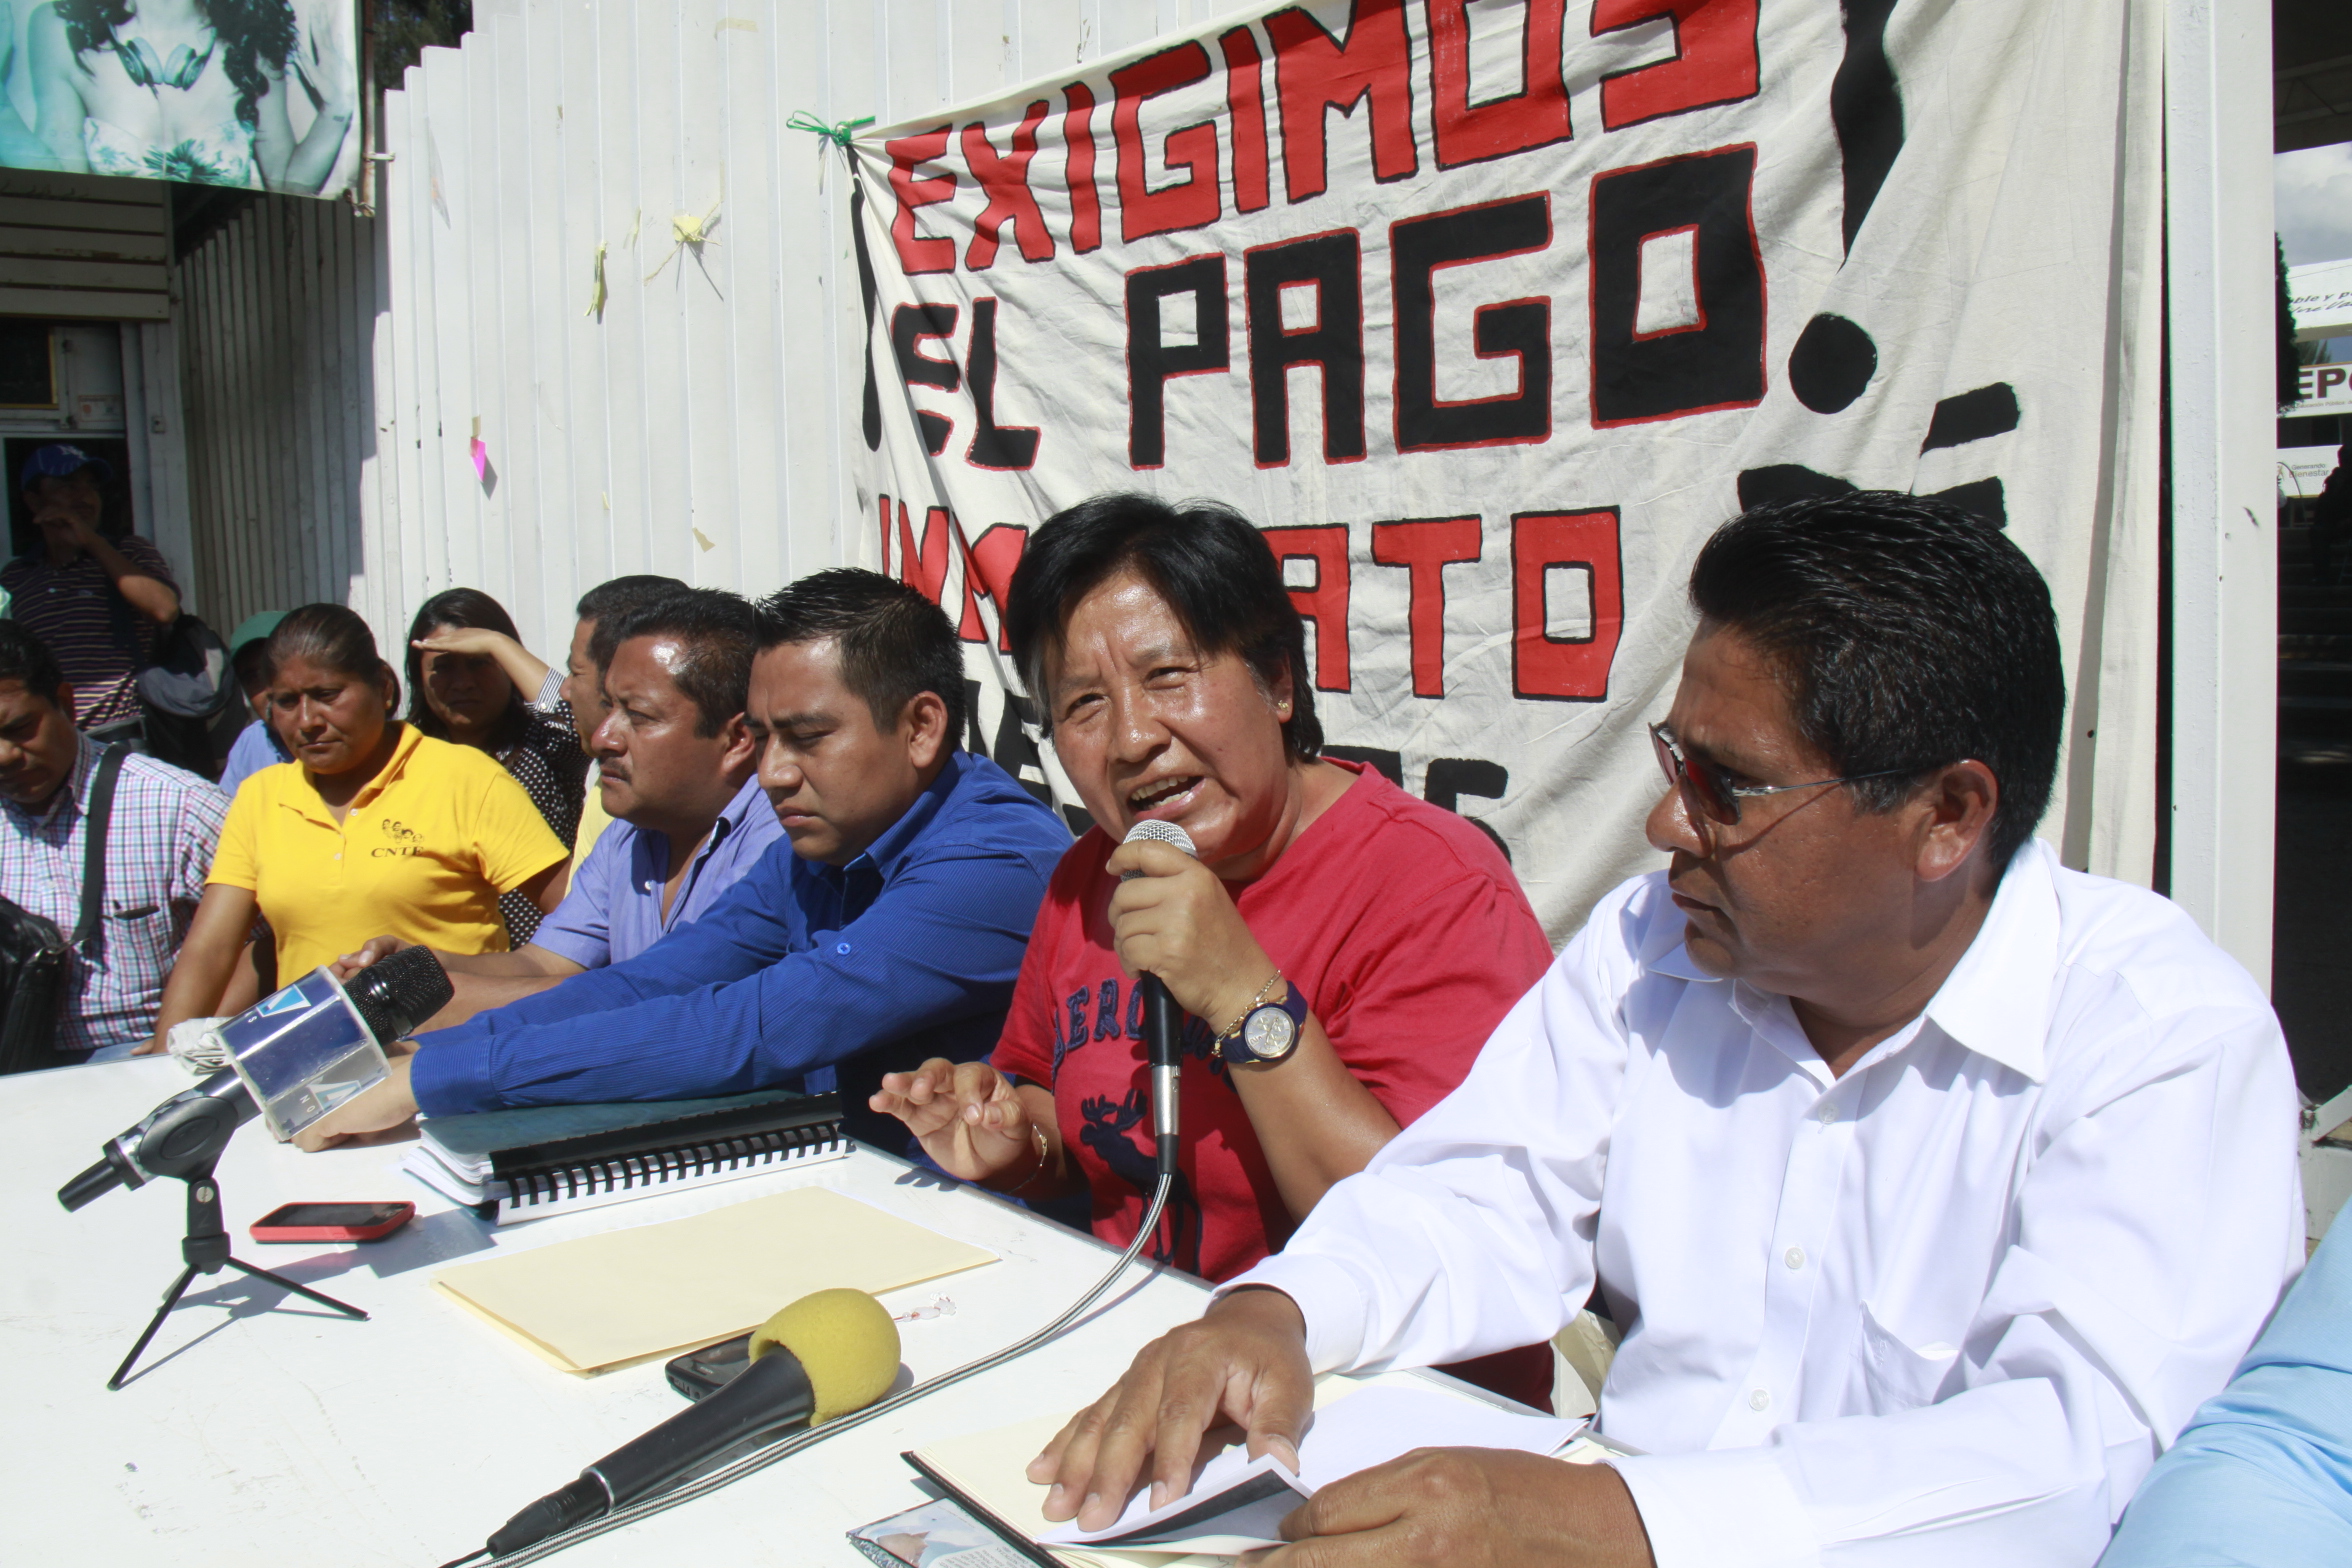 Anuncia Sección 22 boicot a evaluación docente en Oaxaca